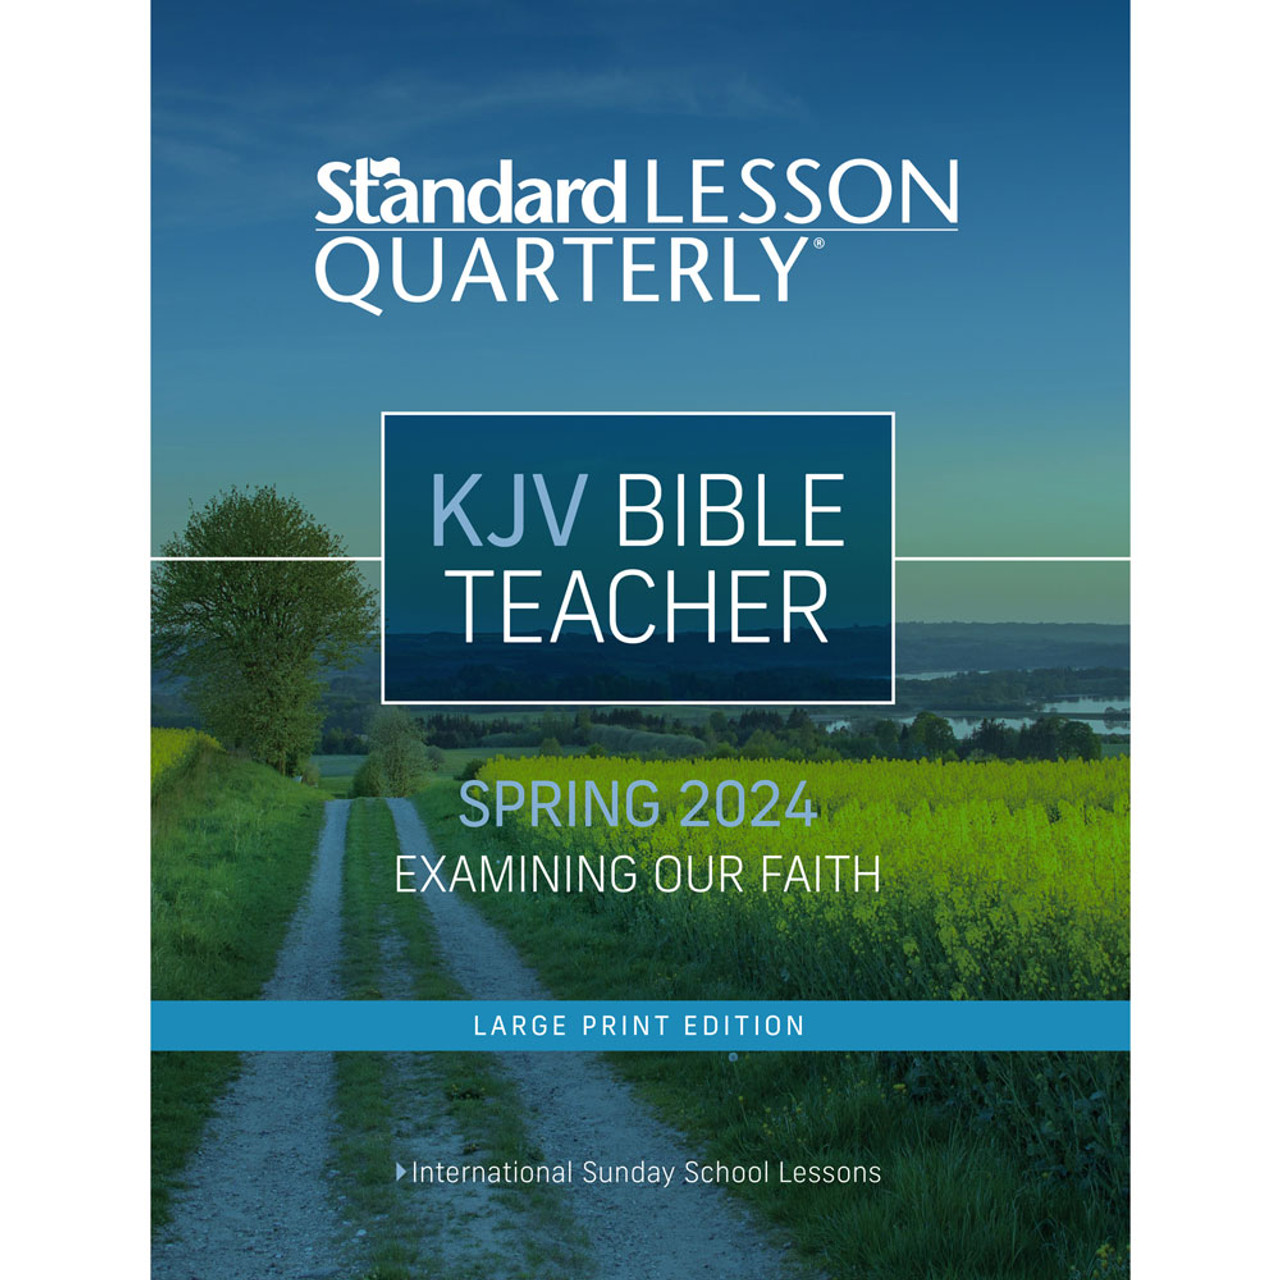 Adult (KJV) Bible Teacher Large Print Standard Lesson Quarterly